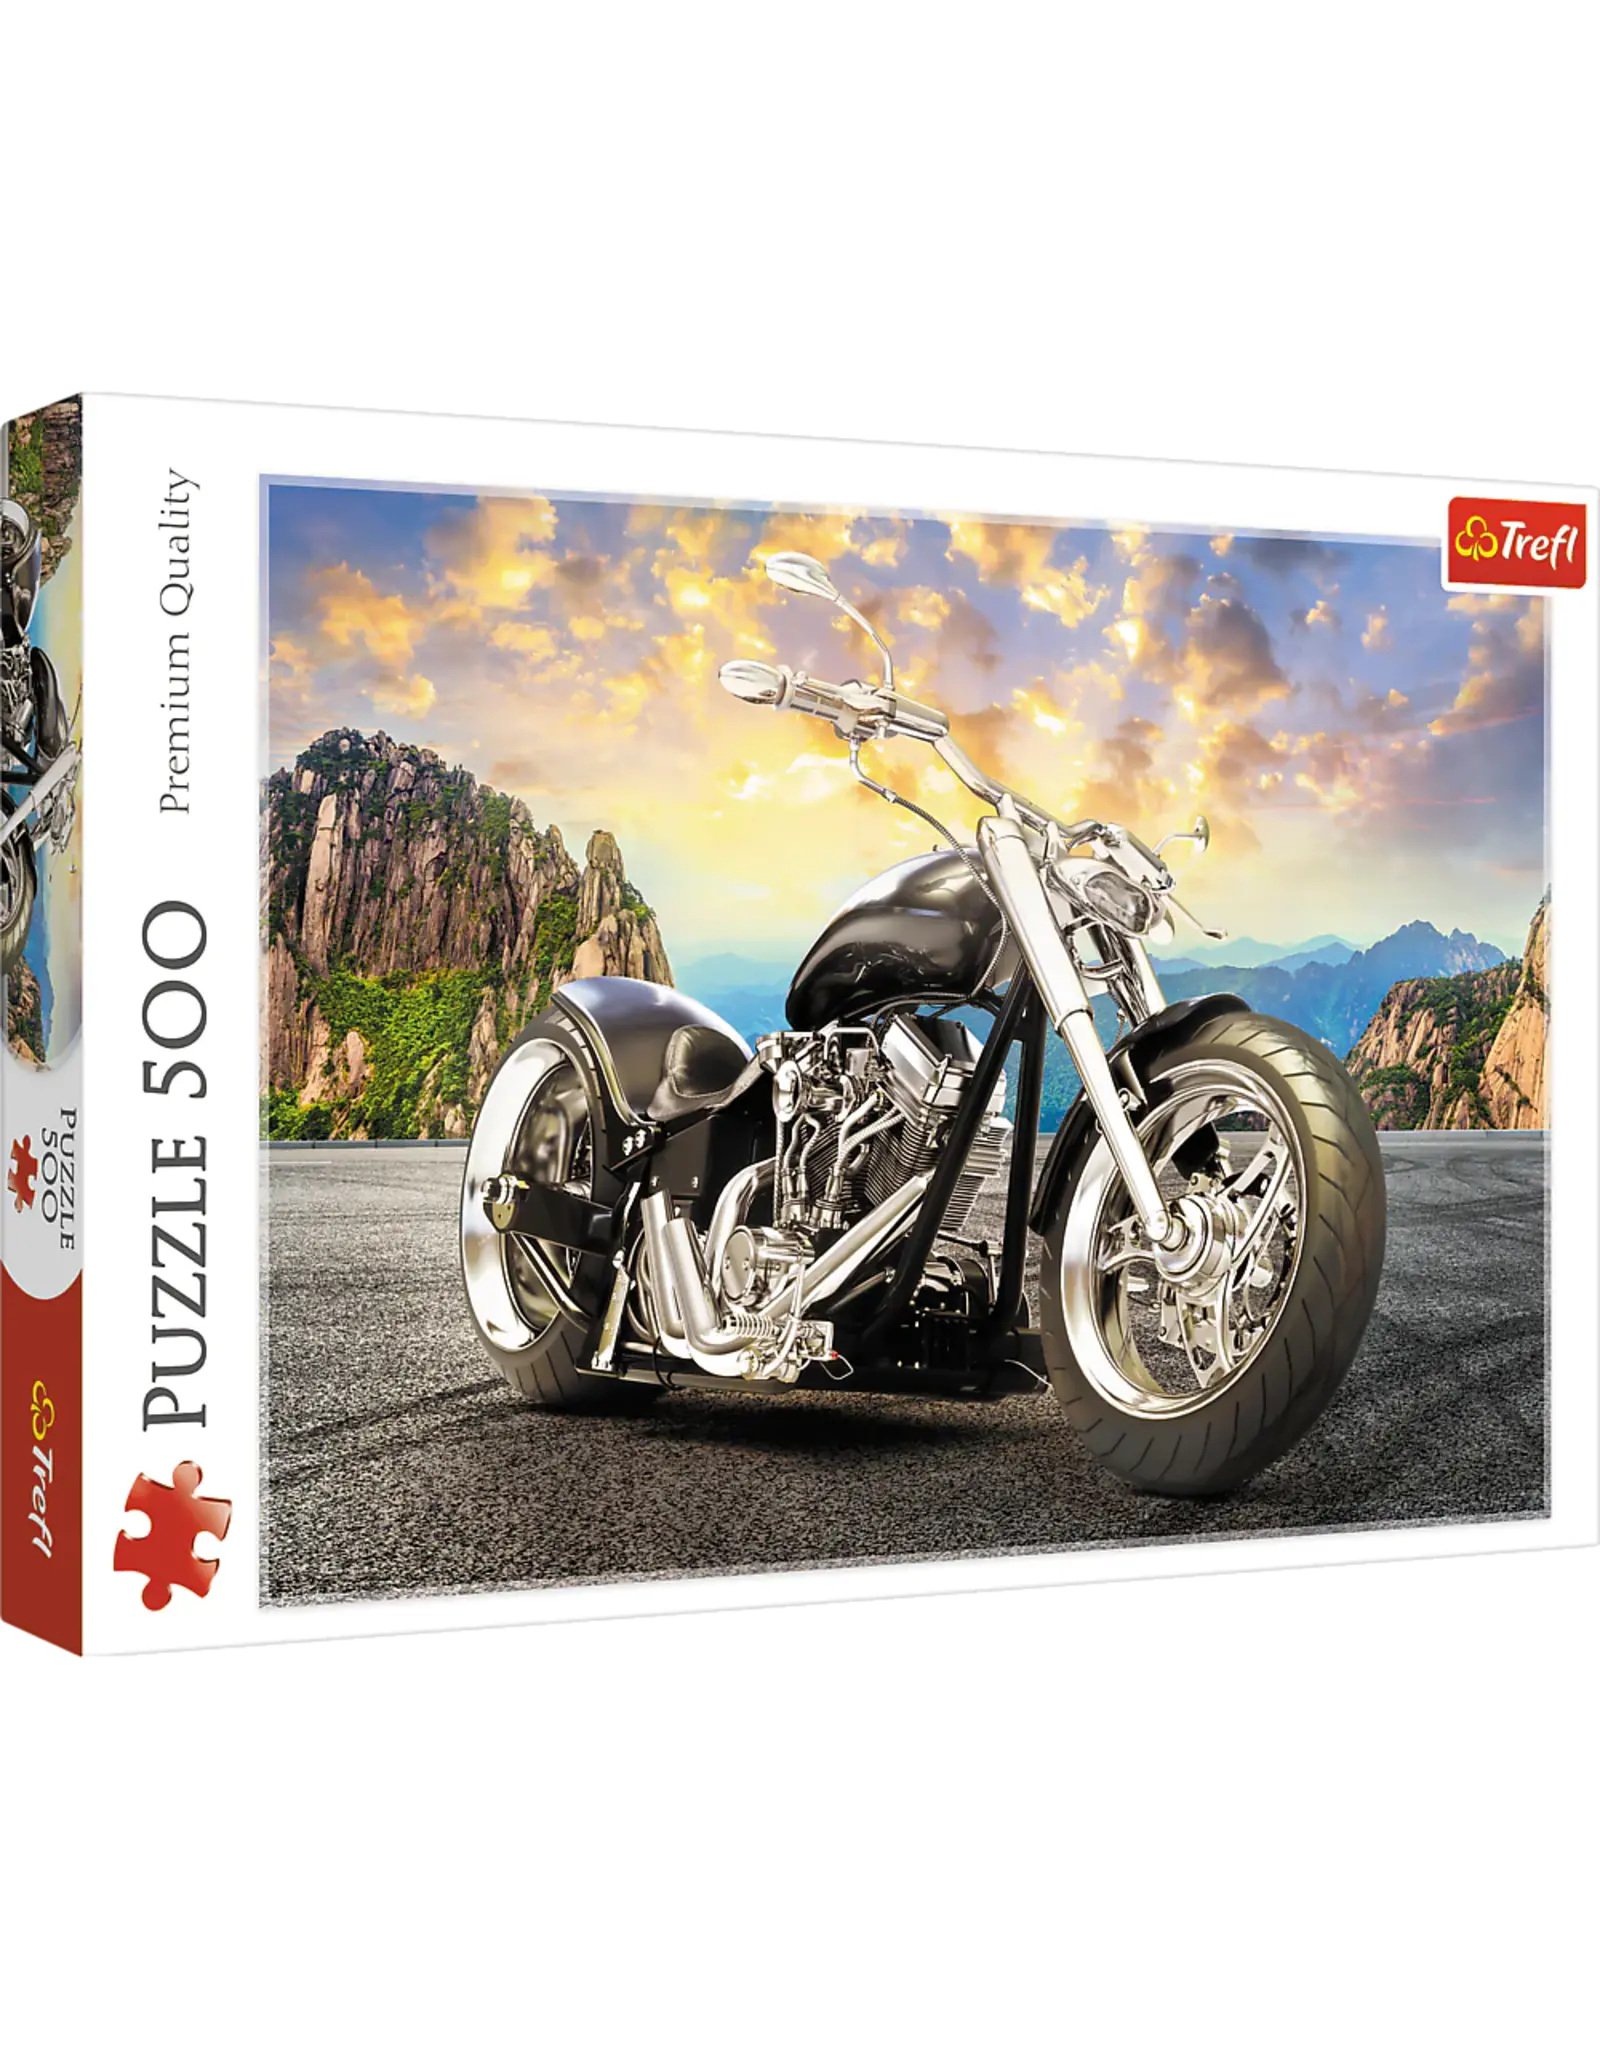 Trefl Puzzle: Black Motorcycle 500pc